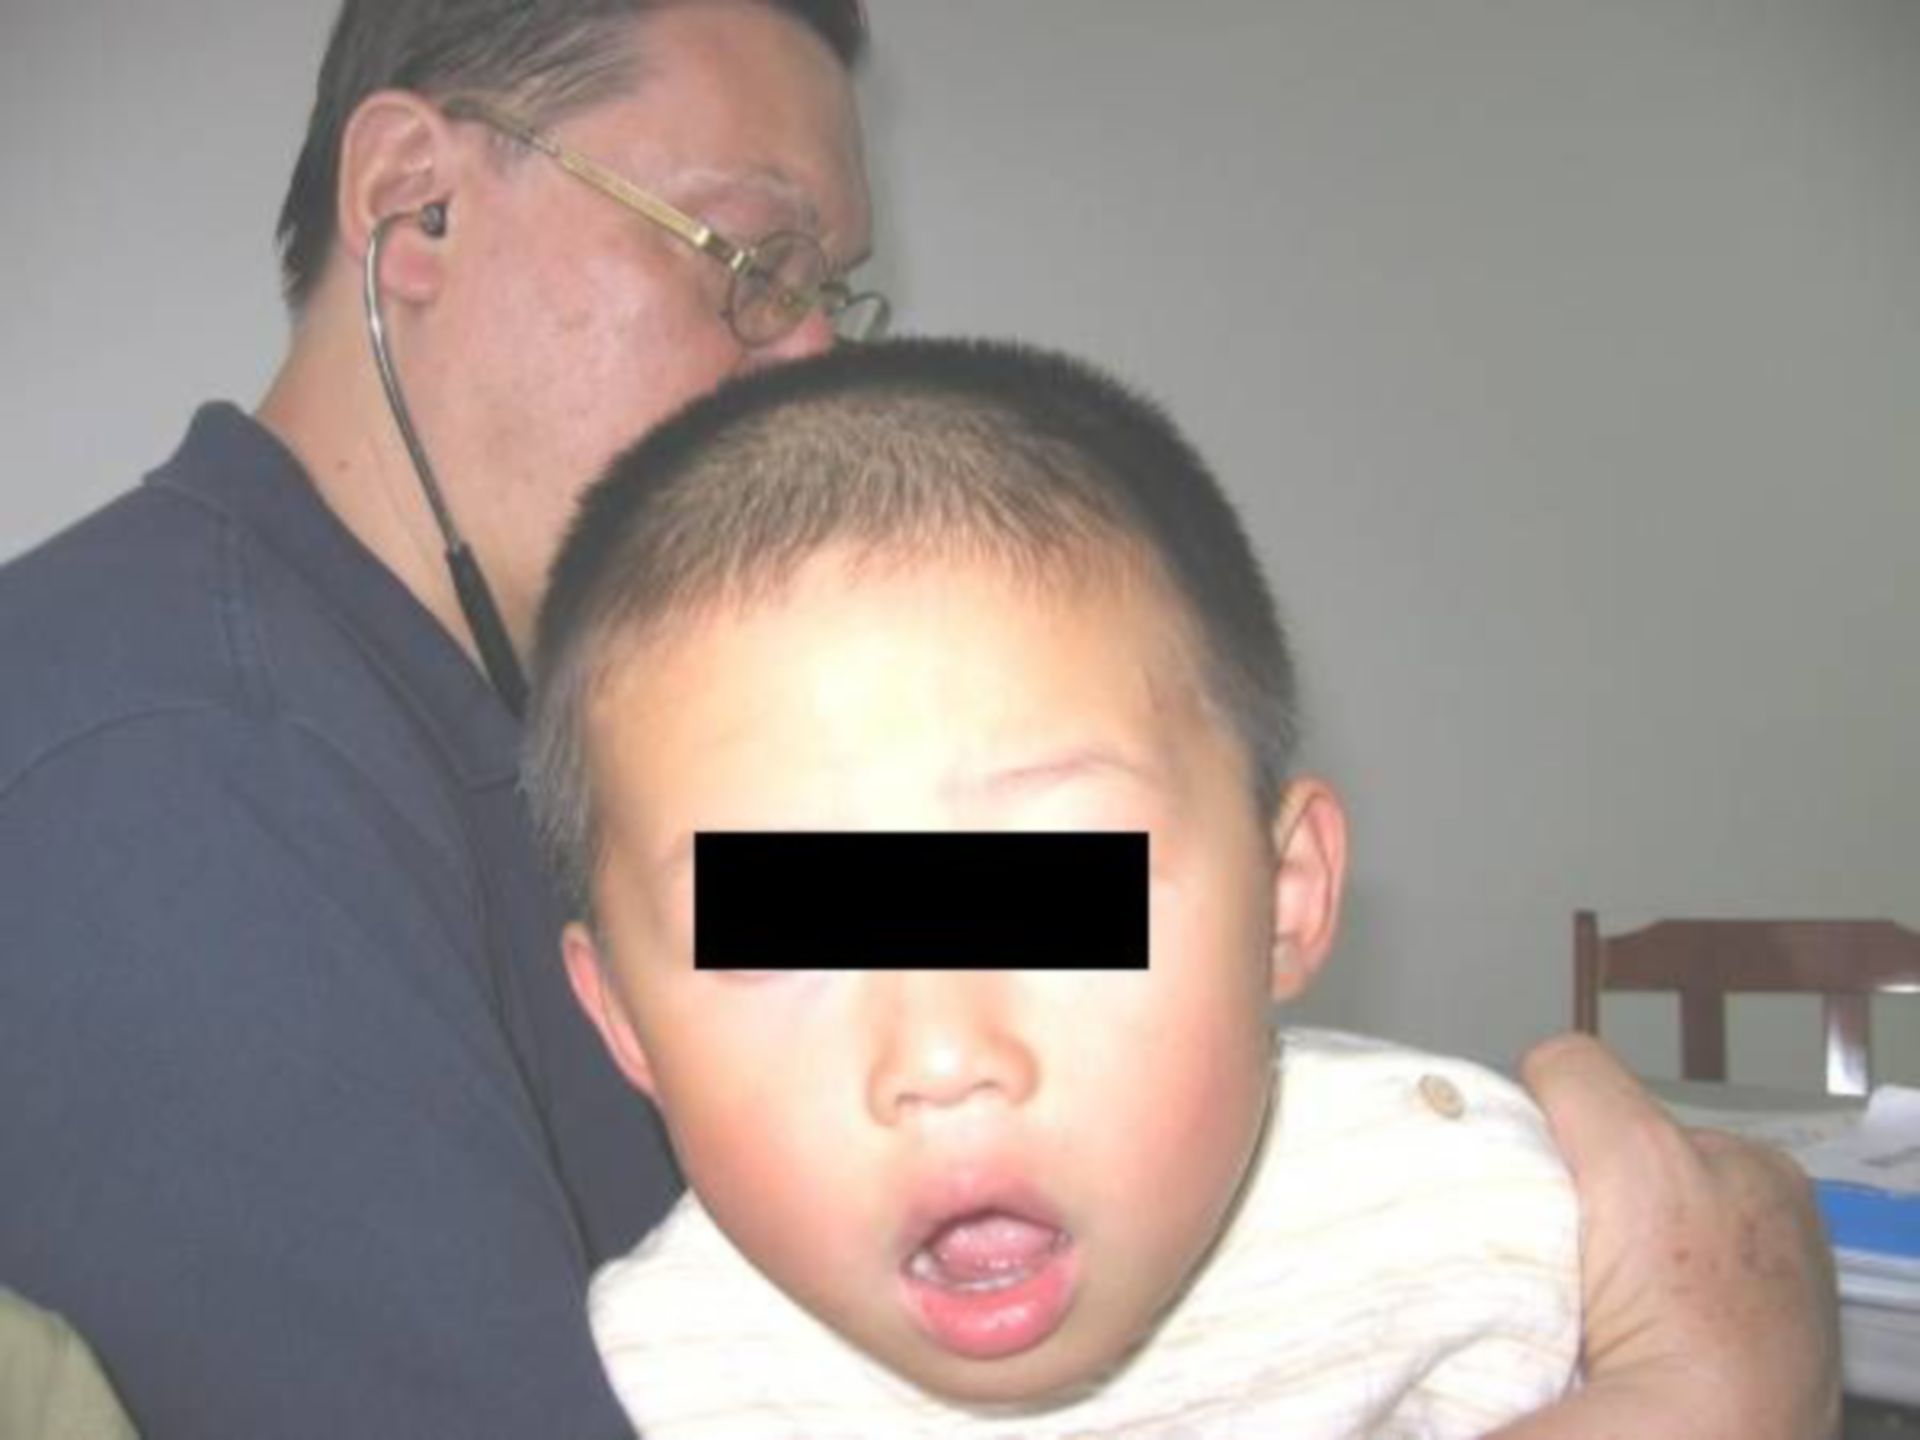 Child with bronchitis